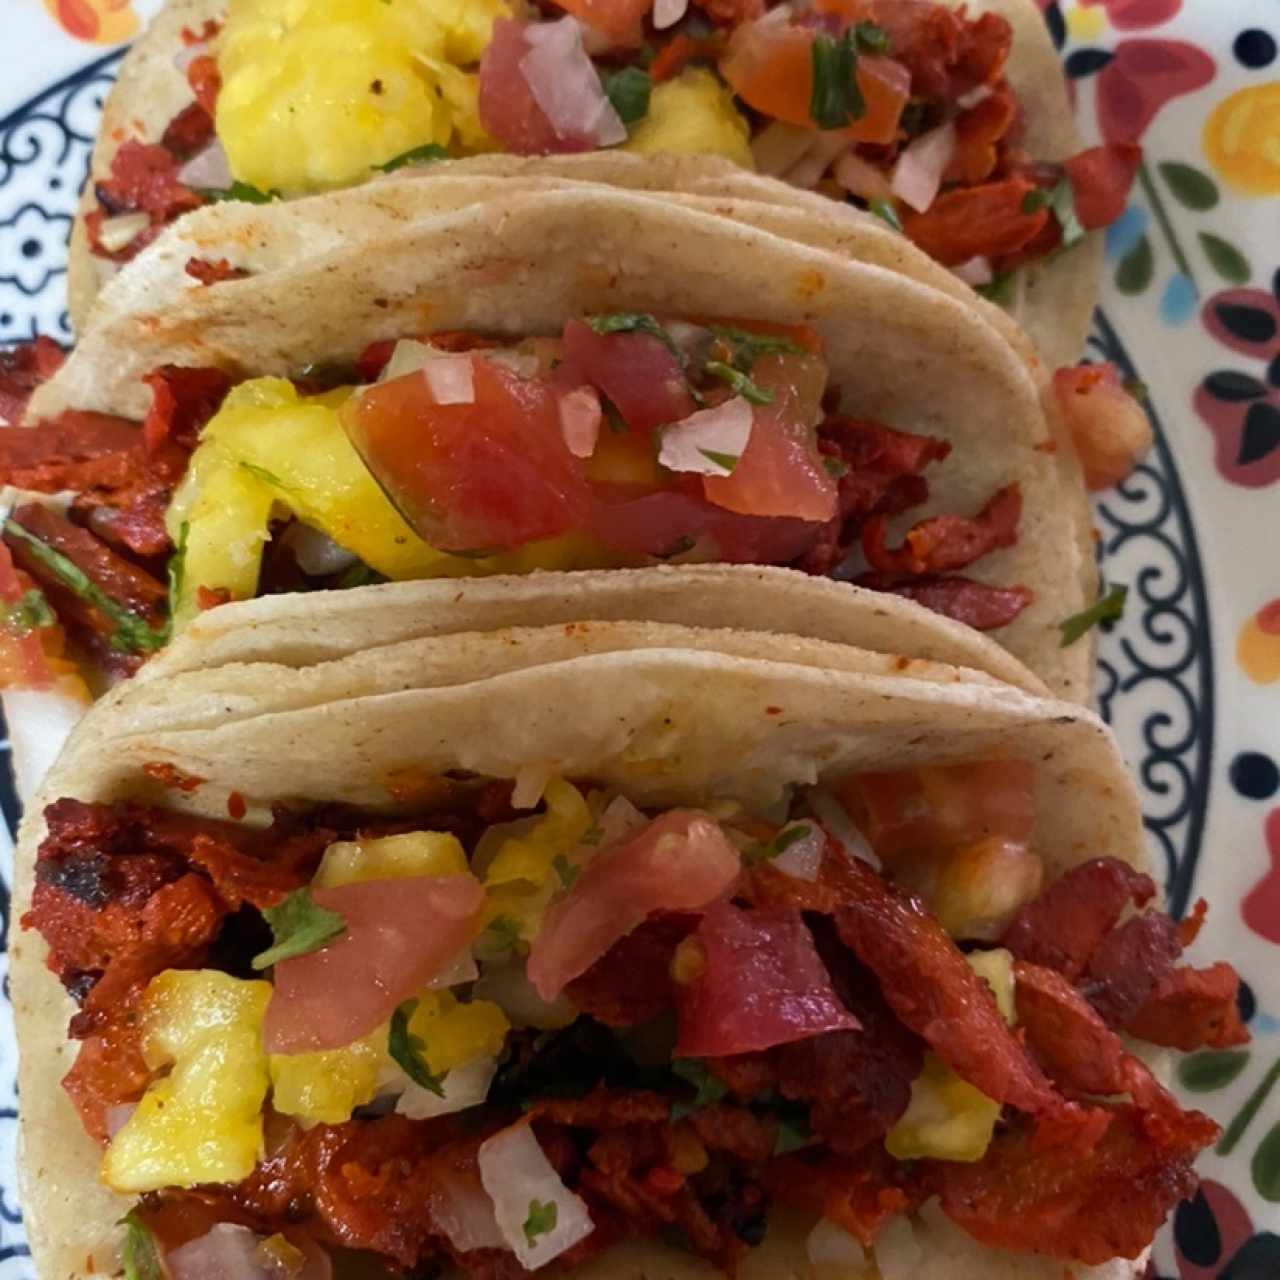 Tacos pastor